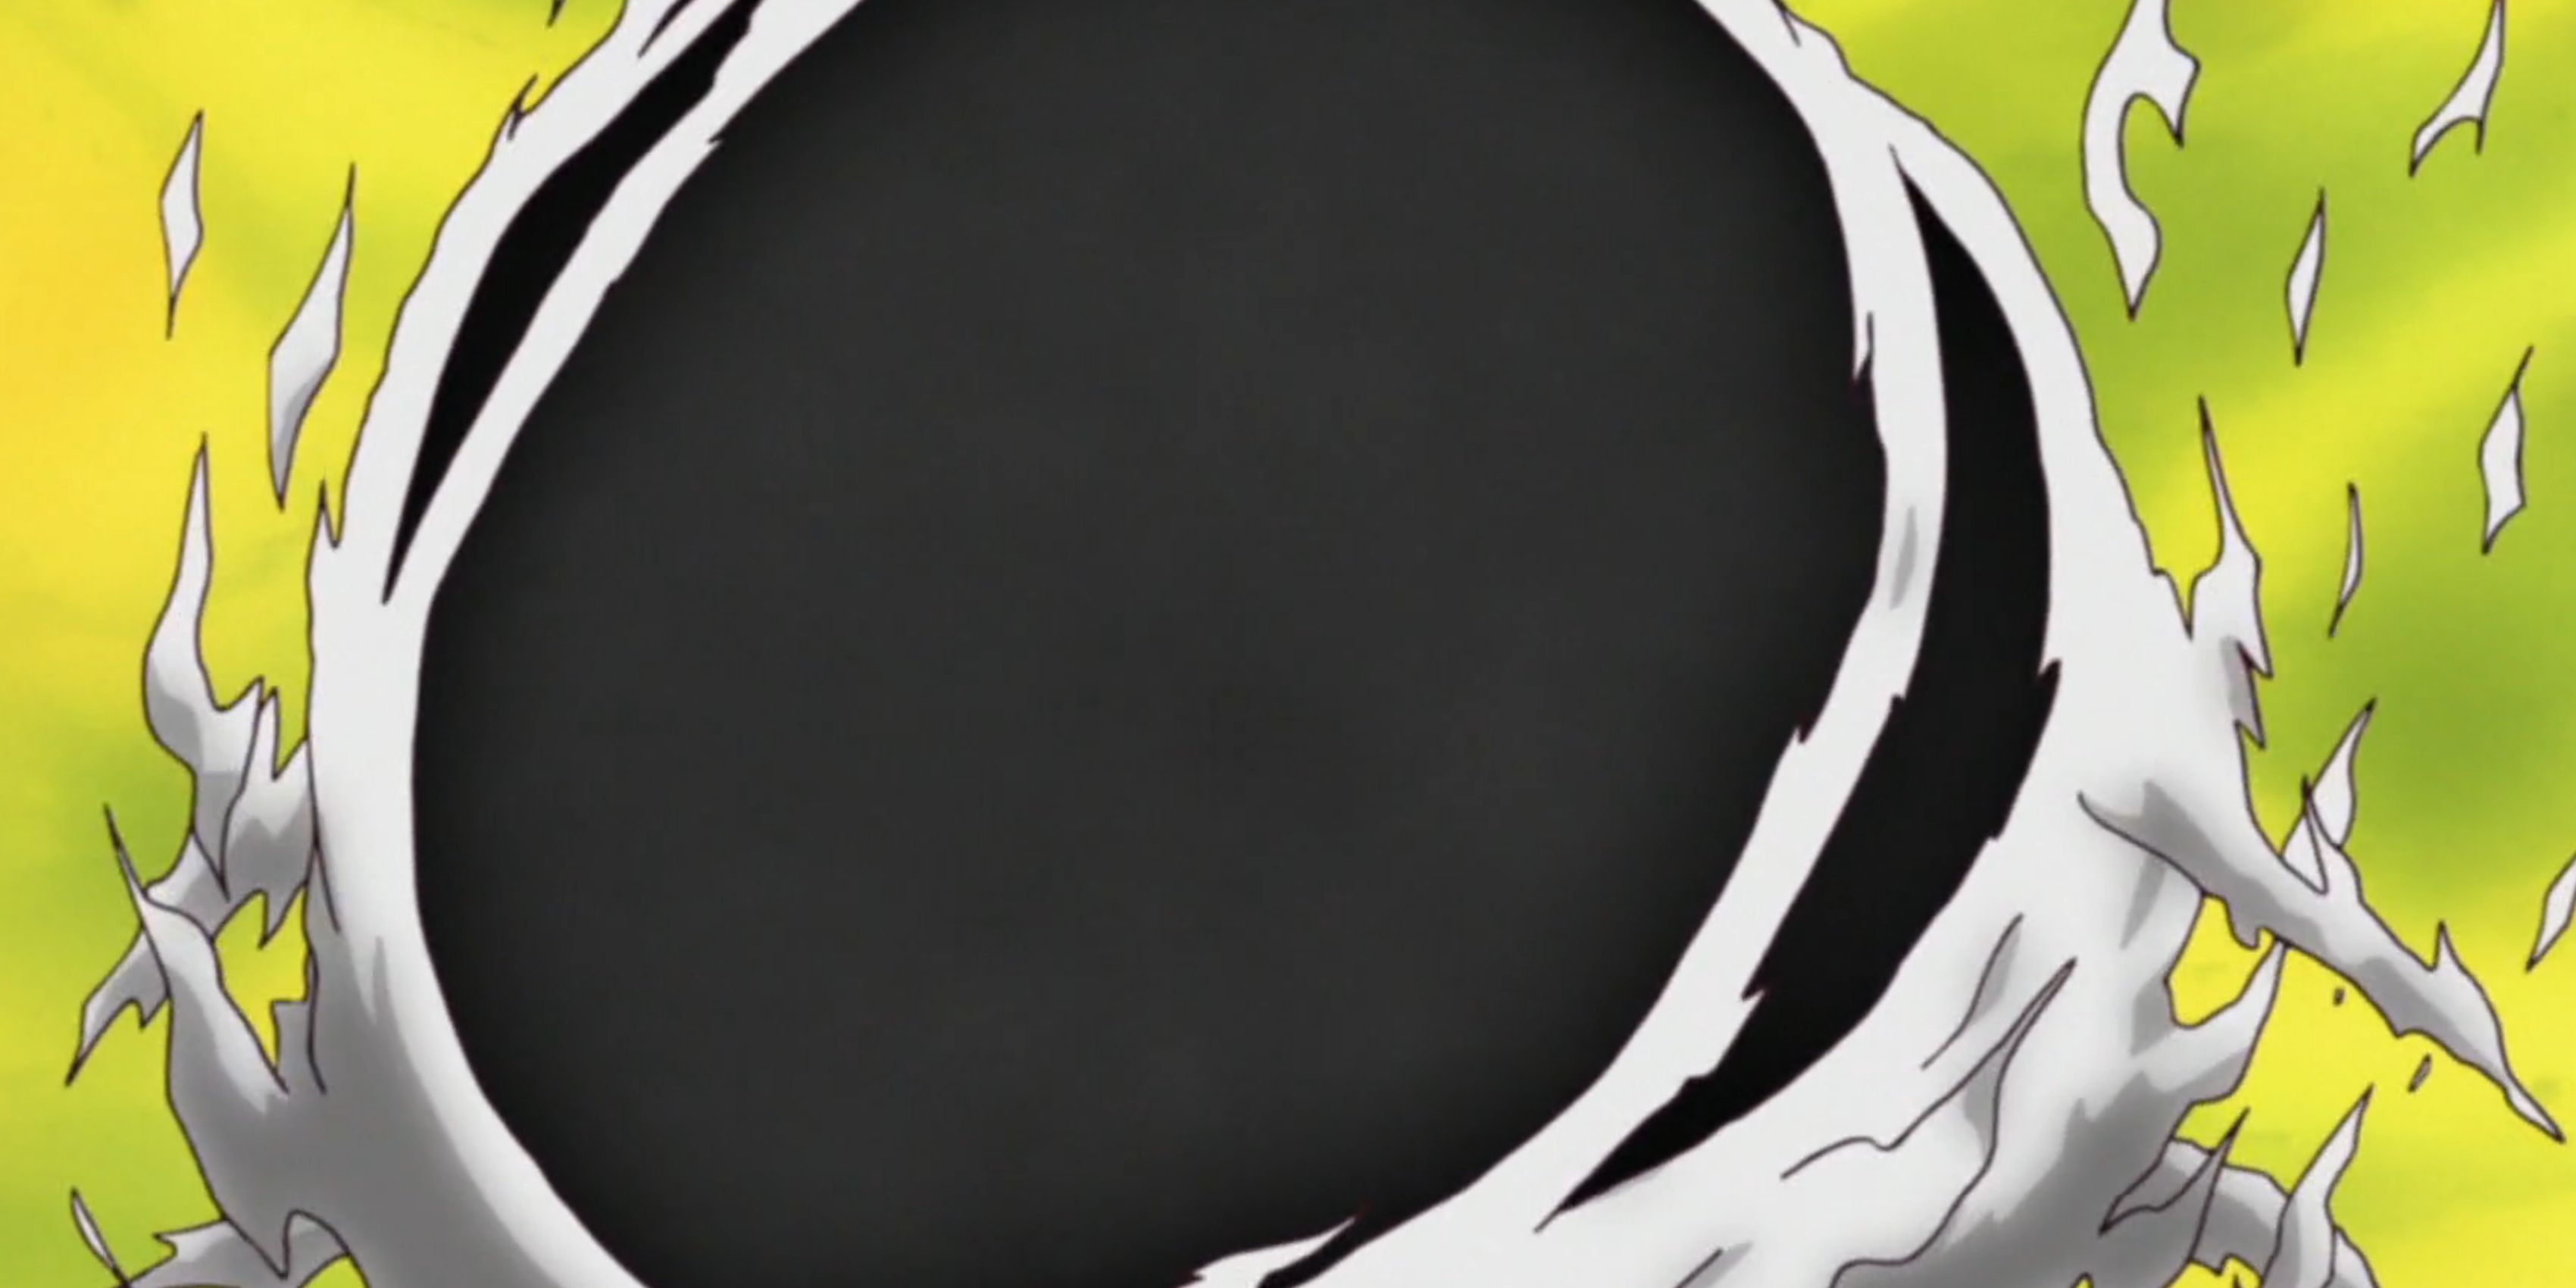 Kaguya uses Expansive Truth Seeking Ball to end everything